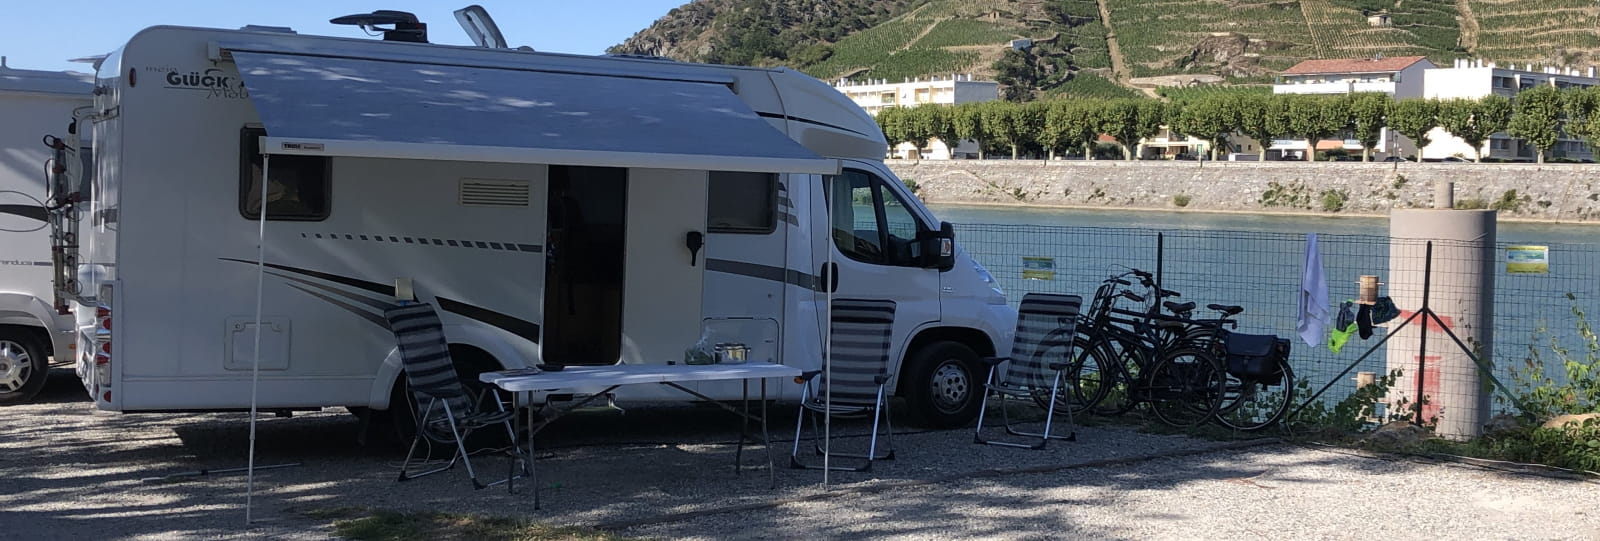 Aire de camping-car - Camping Le Rhône